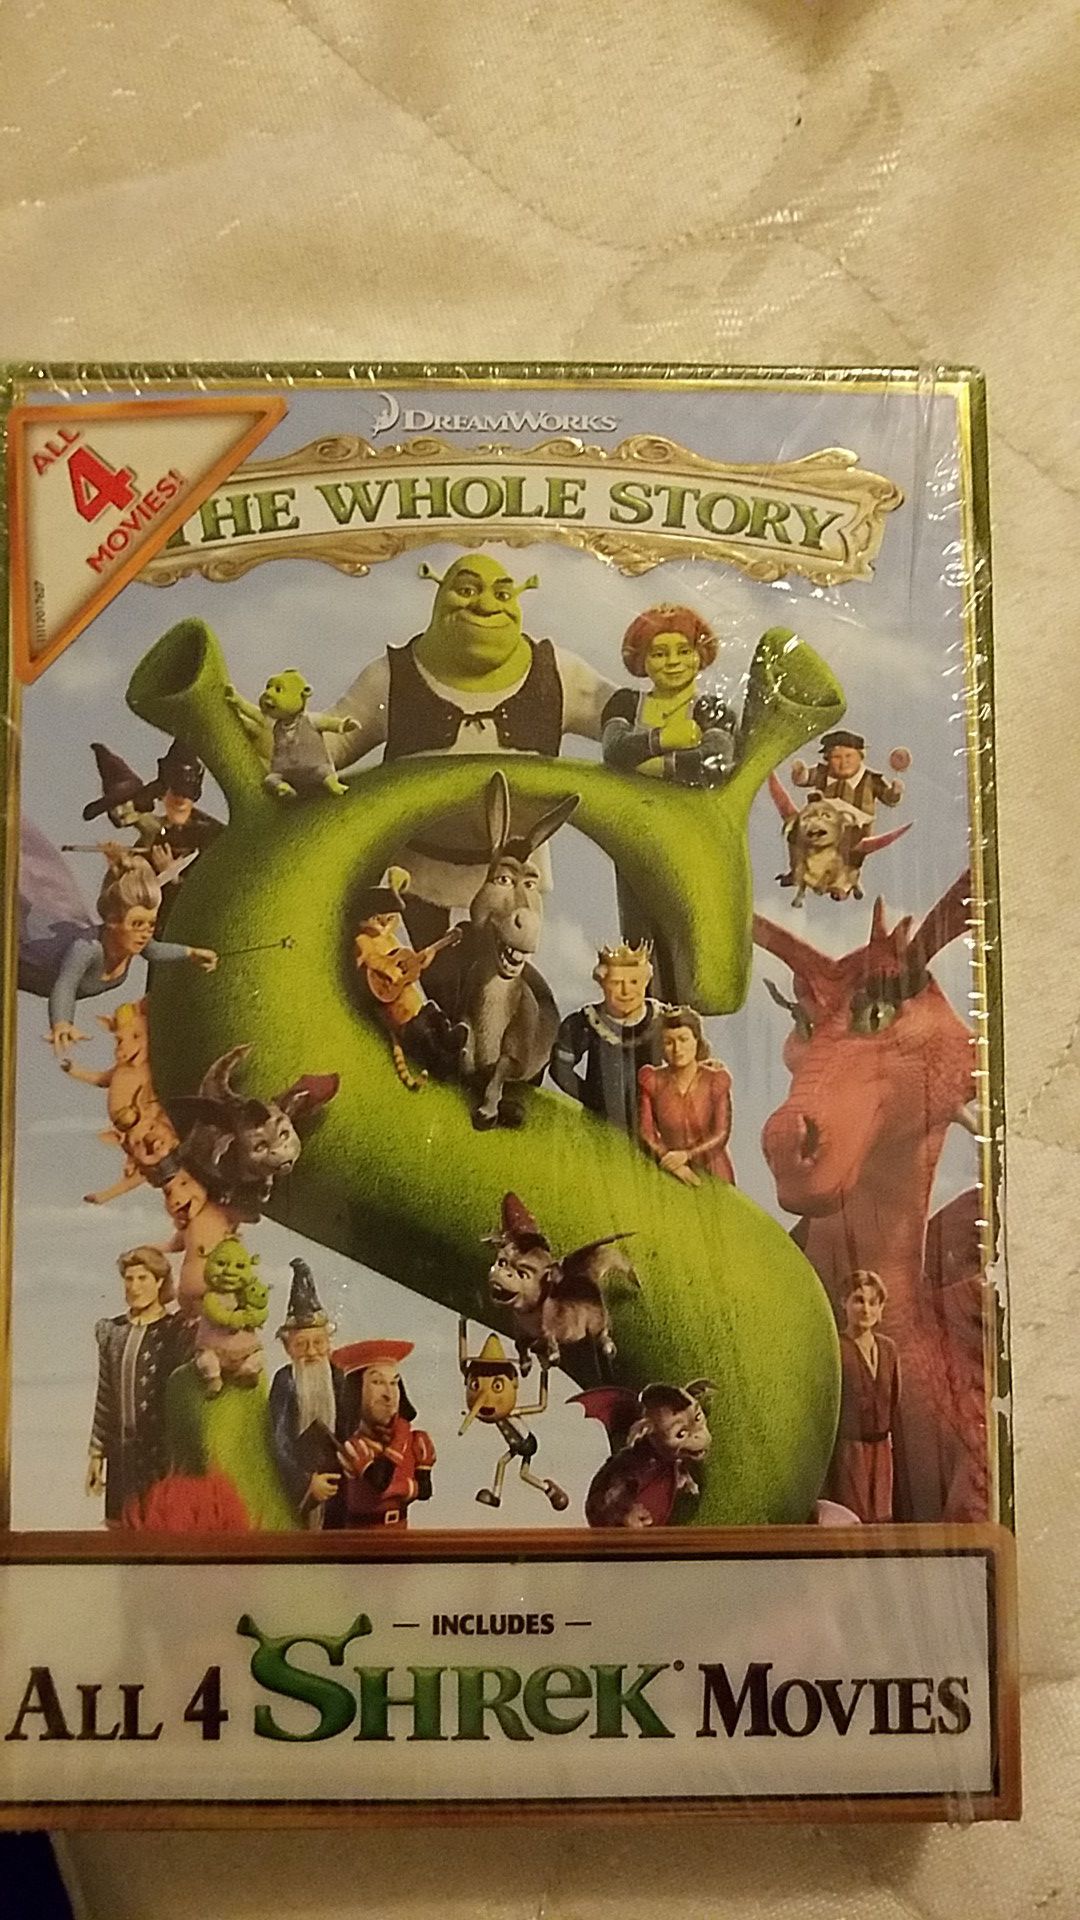 Shrek The whole Story all 4 shrek movies